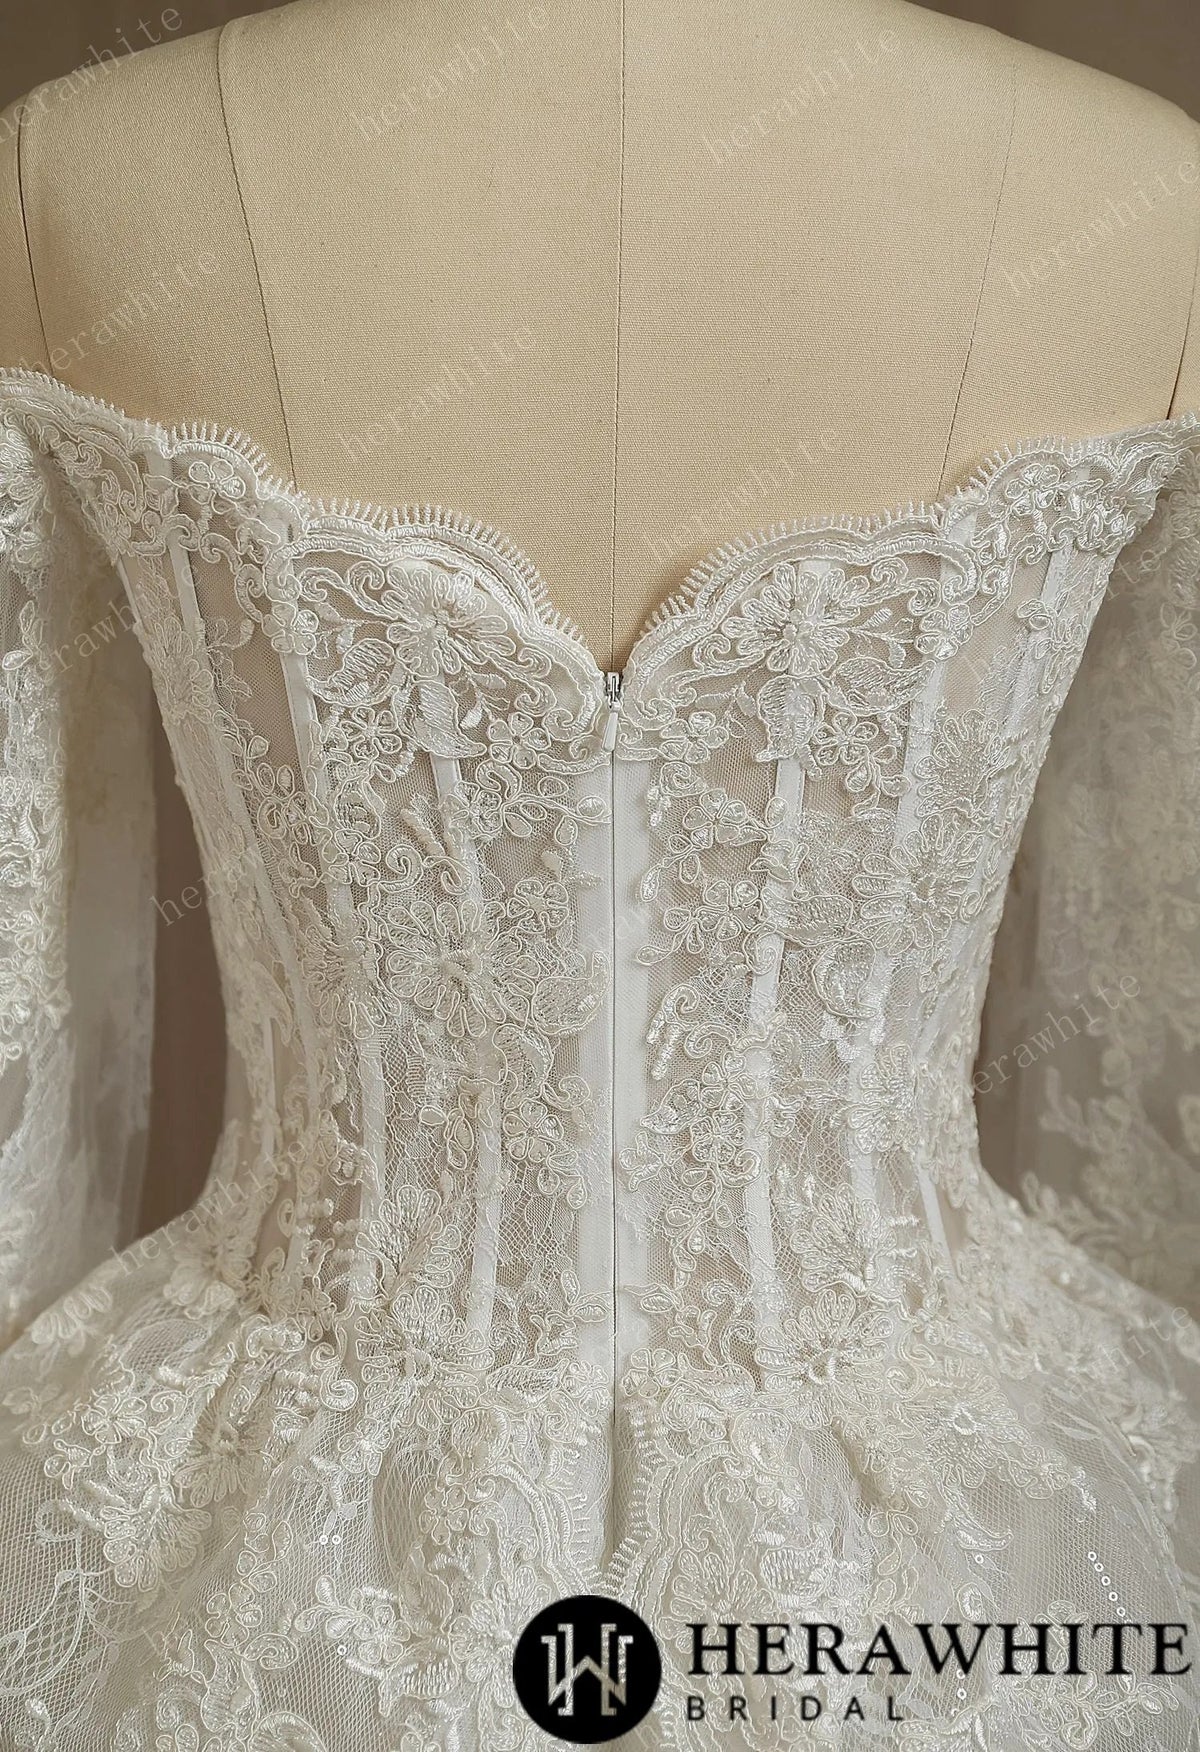 Mini Midi Short Wedding Dress Reception Dress Sparkle Off the Shoulder Romantic Style All Over Lace Long Sleeve Engagement Dress